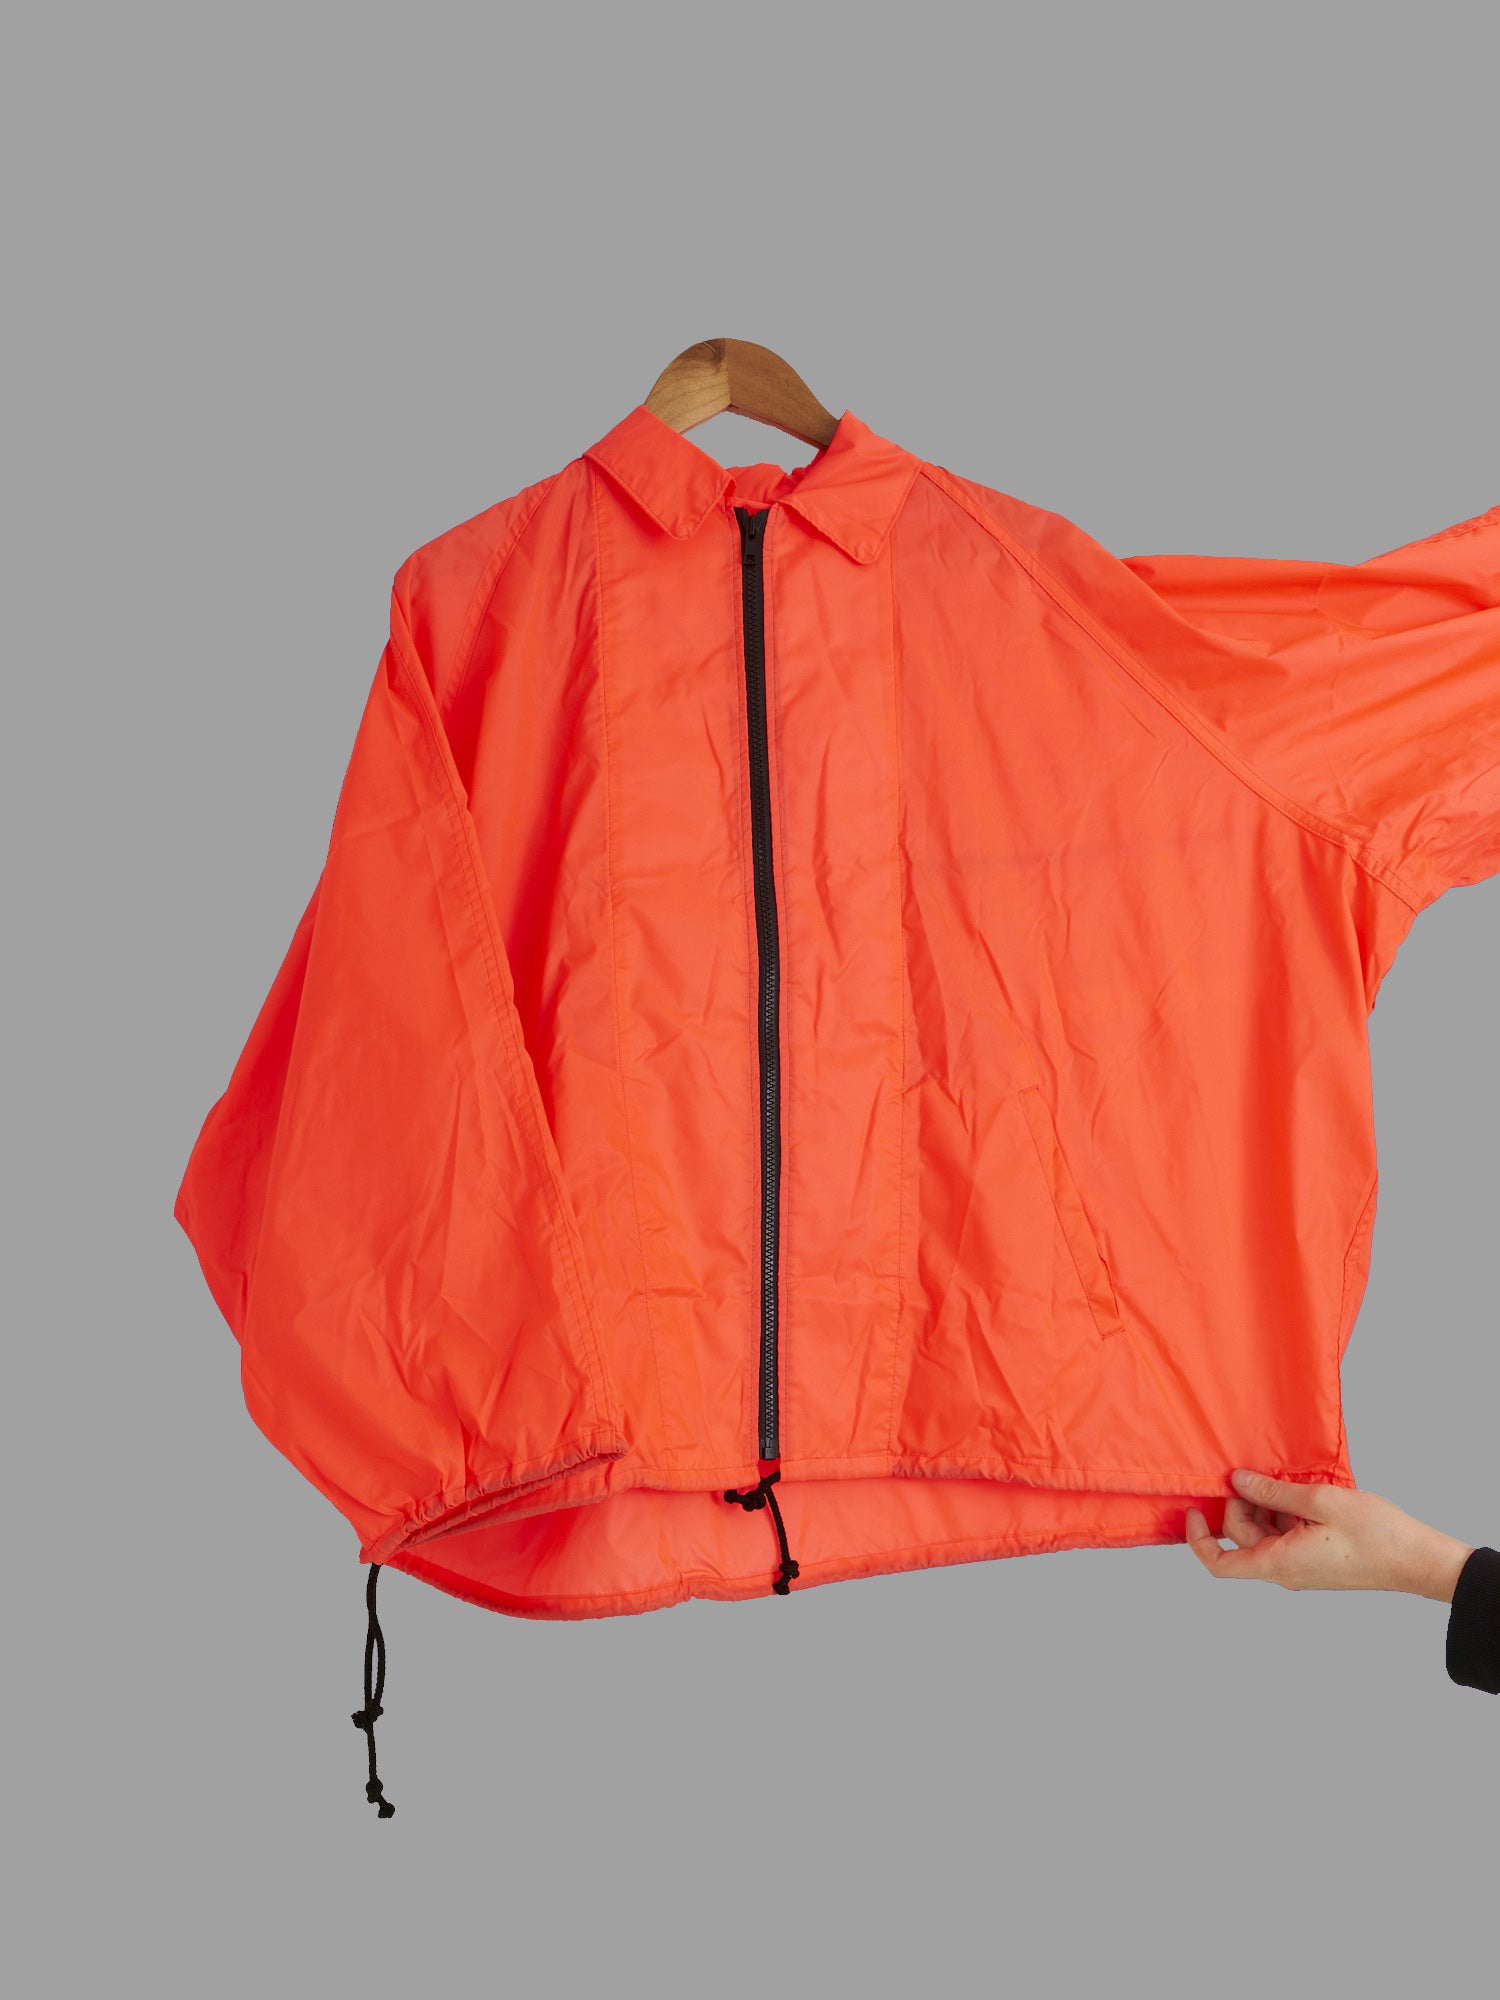 Yohji Yamamoto Workshop 1980s fluorescent orange extra wide hooded jacket -  L M